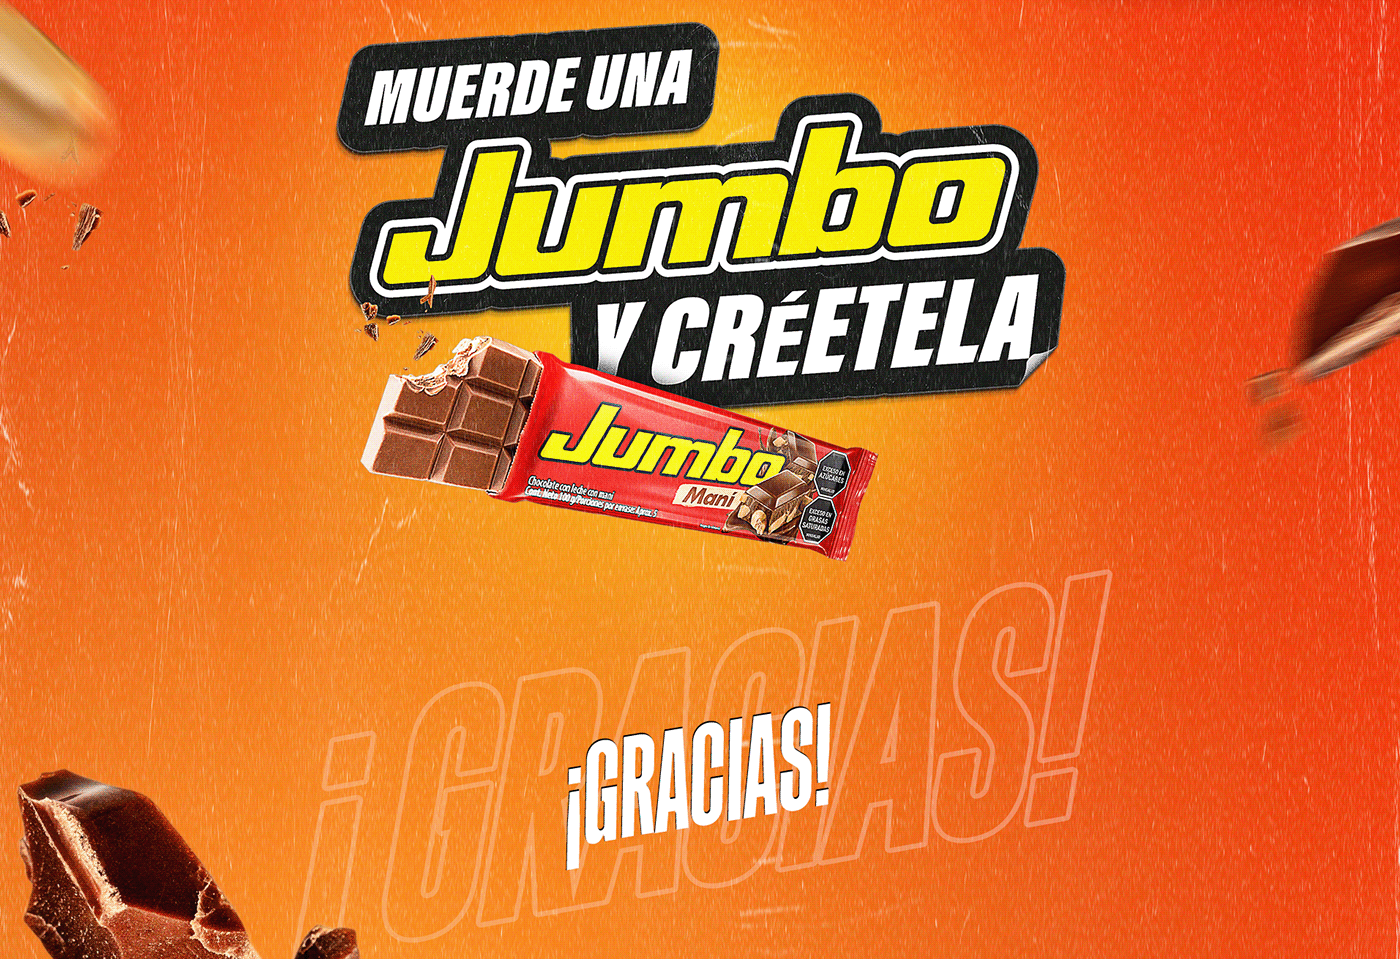 Jumbo chocolates publicidad diseño design branding 